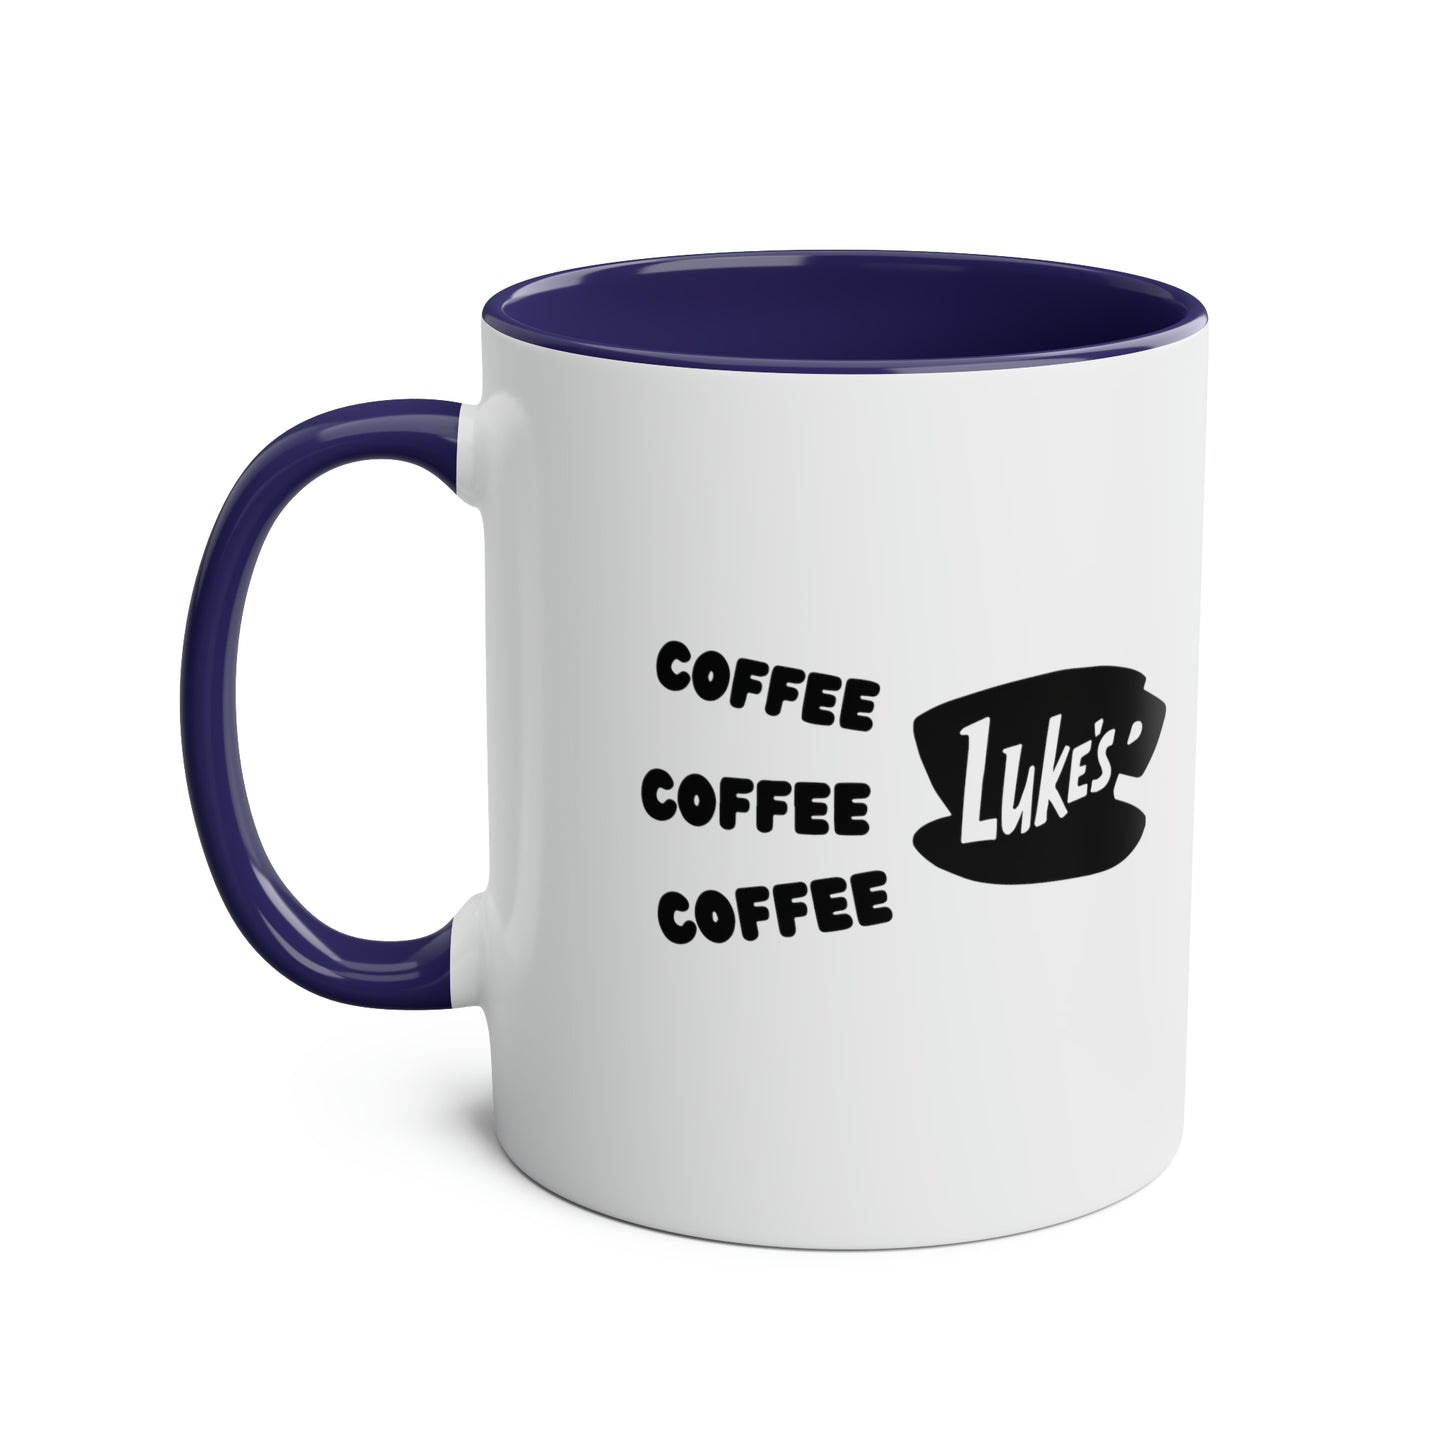 COFFEE, COFFEE, COFFEE / Gilmore Girls Mug